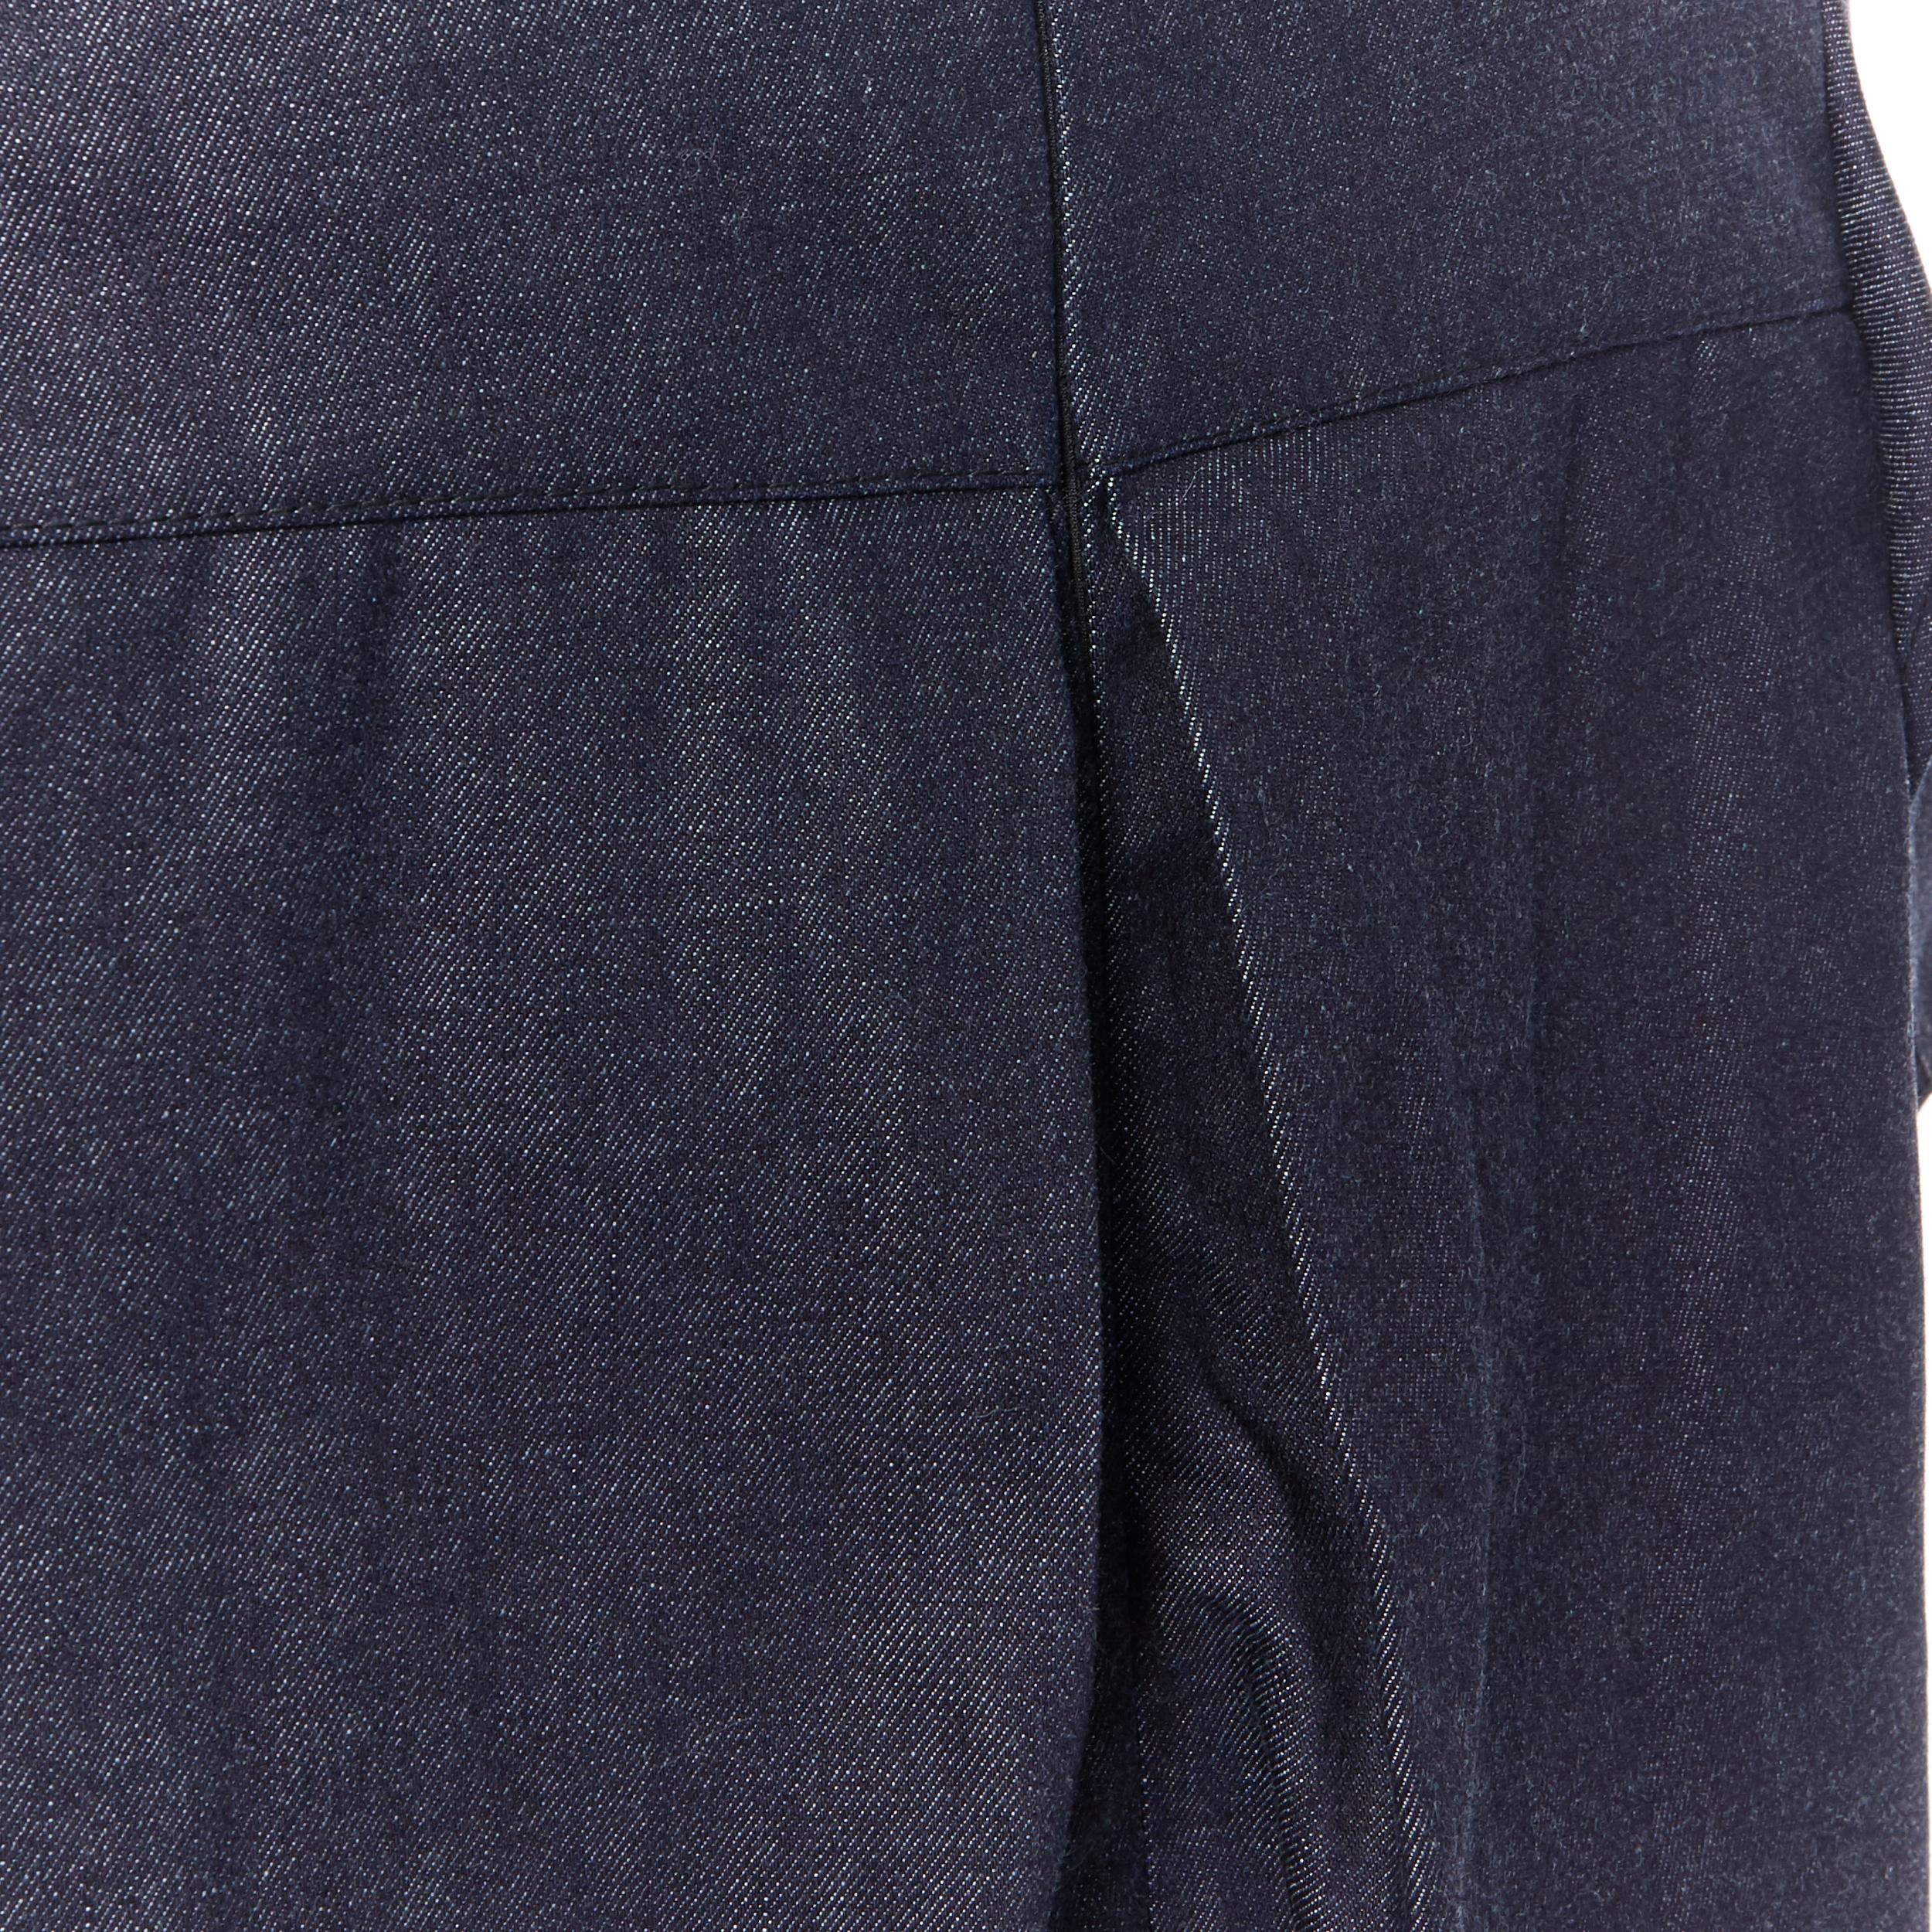 TRICOT COMME DES GARCONS dark indigo blue denim ruffle sleeve casual dress S 2